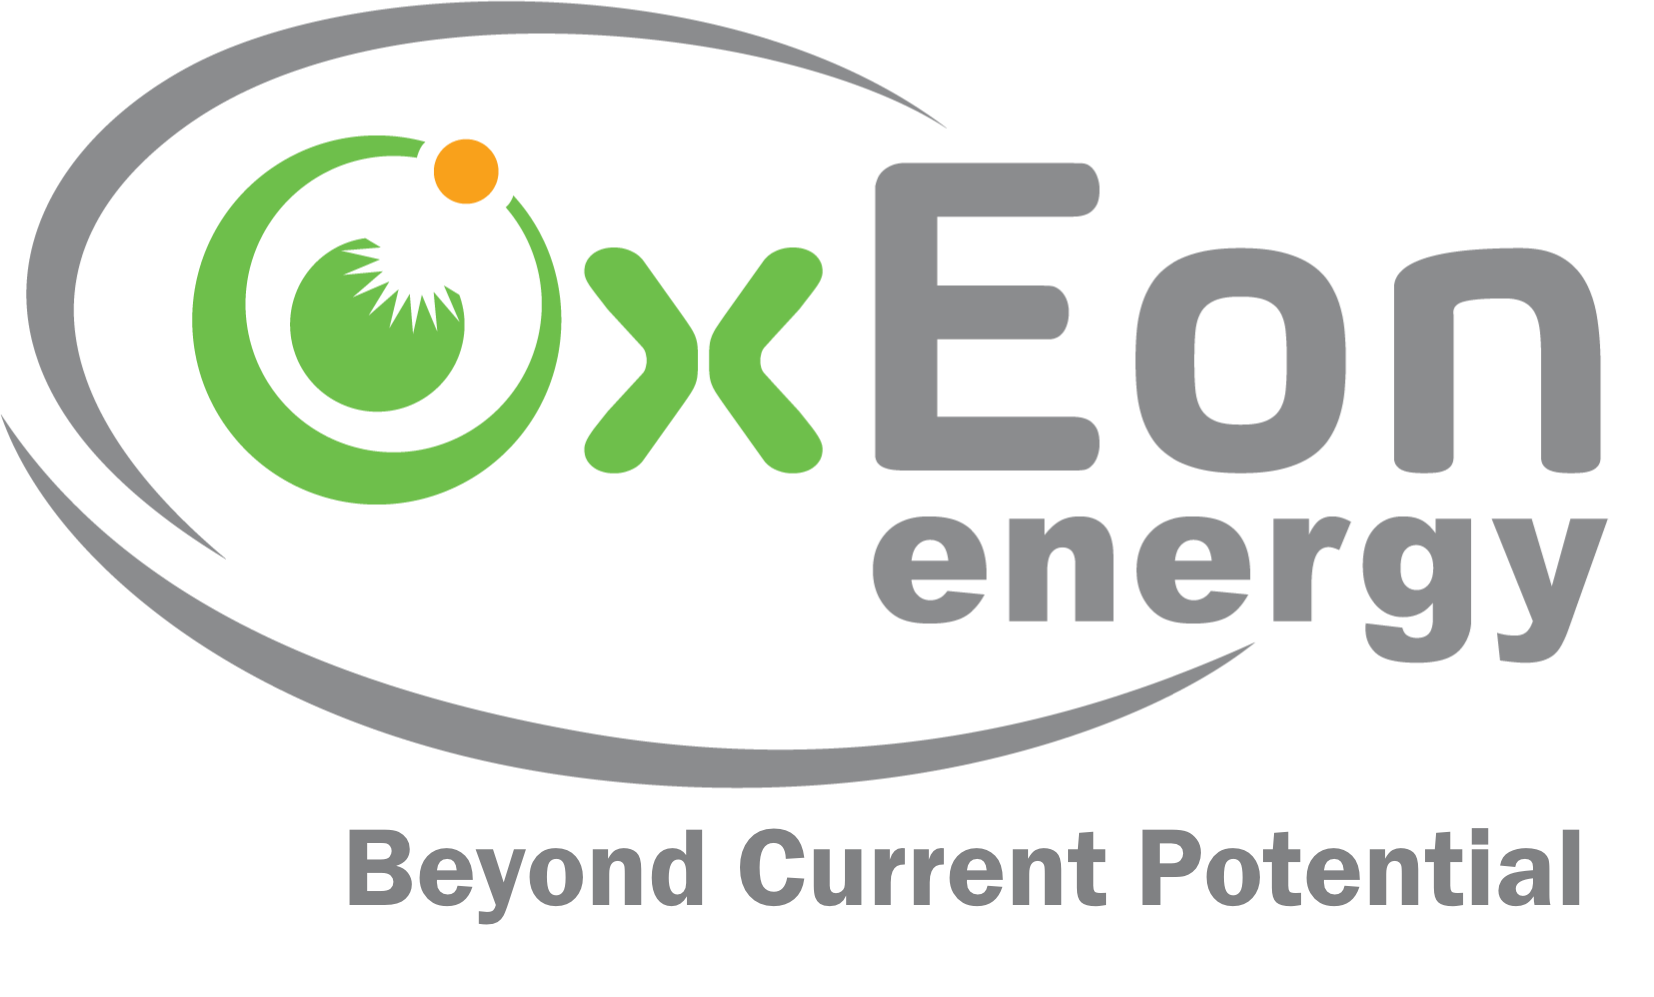 OxEon Energy Company Logo